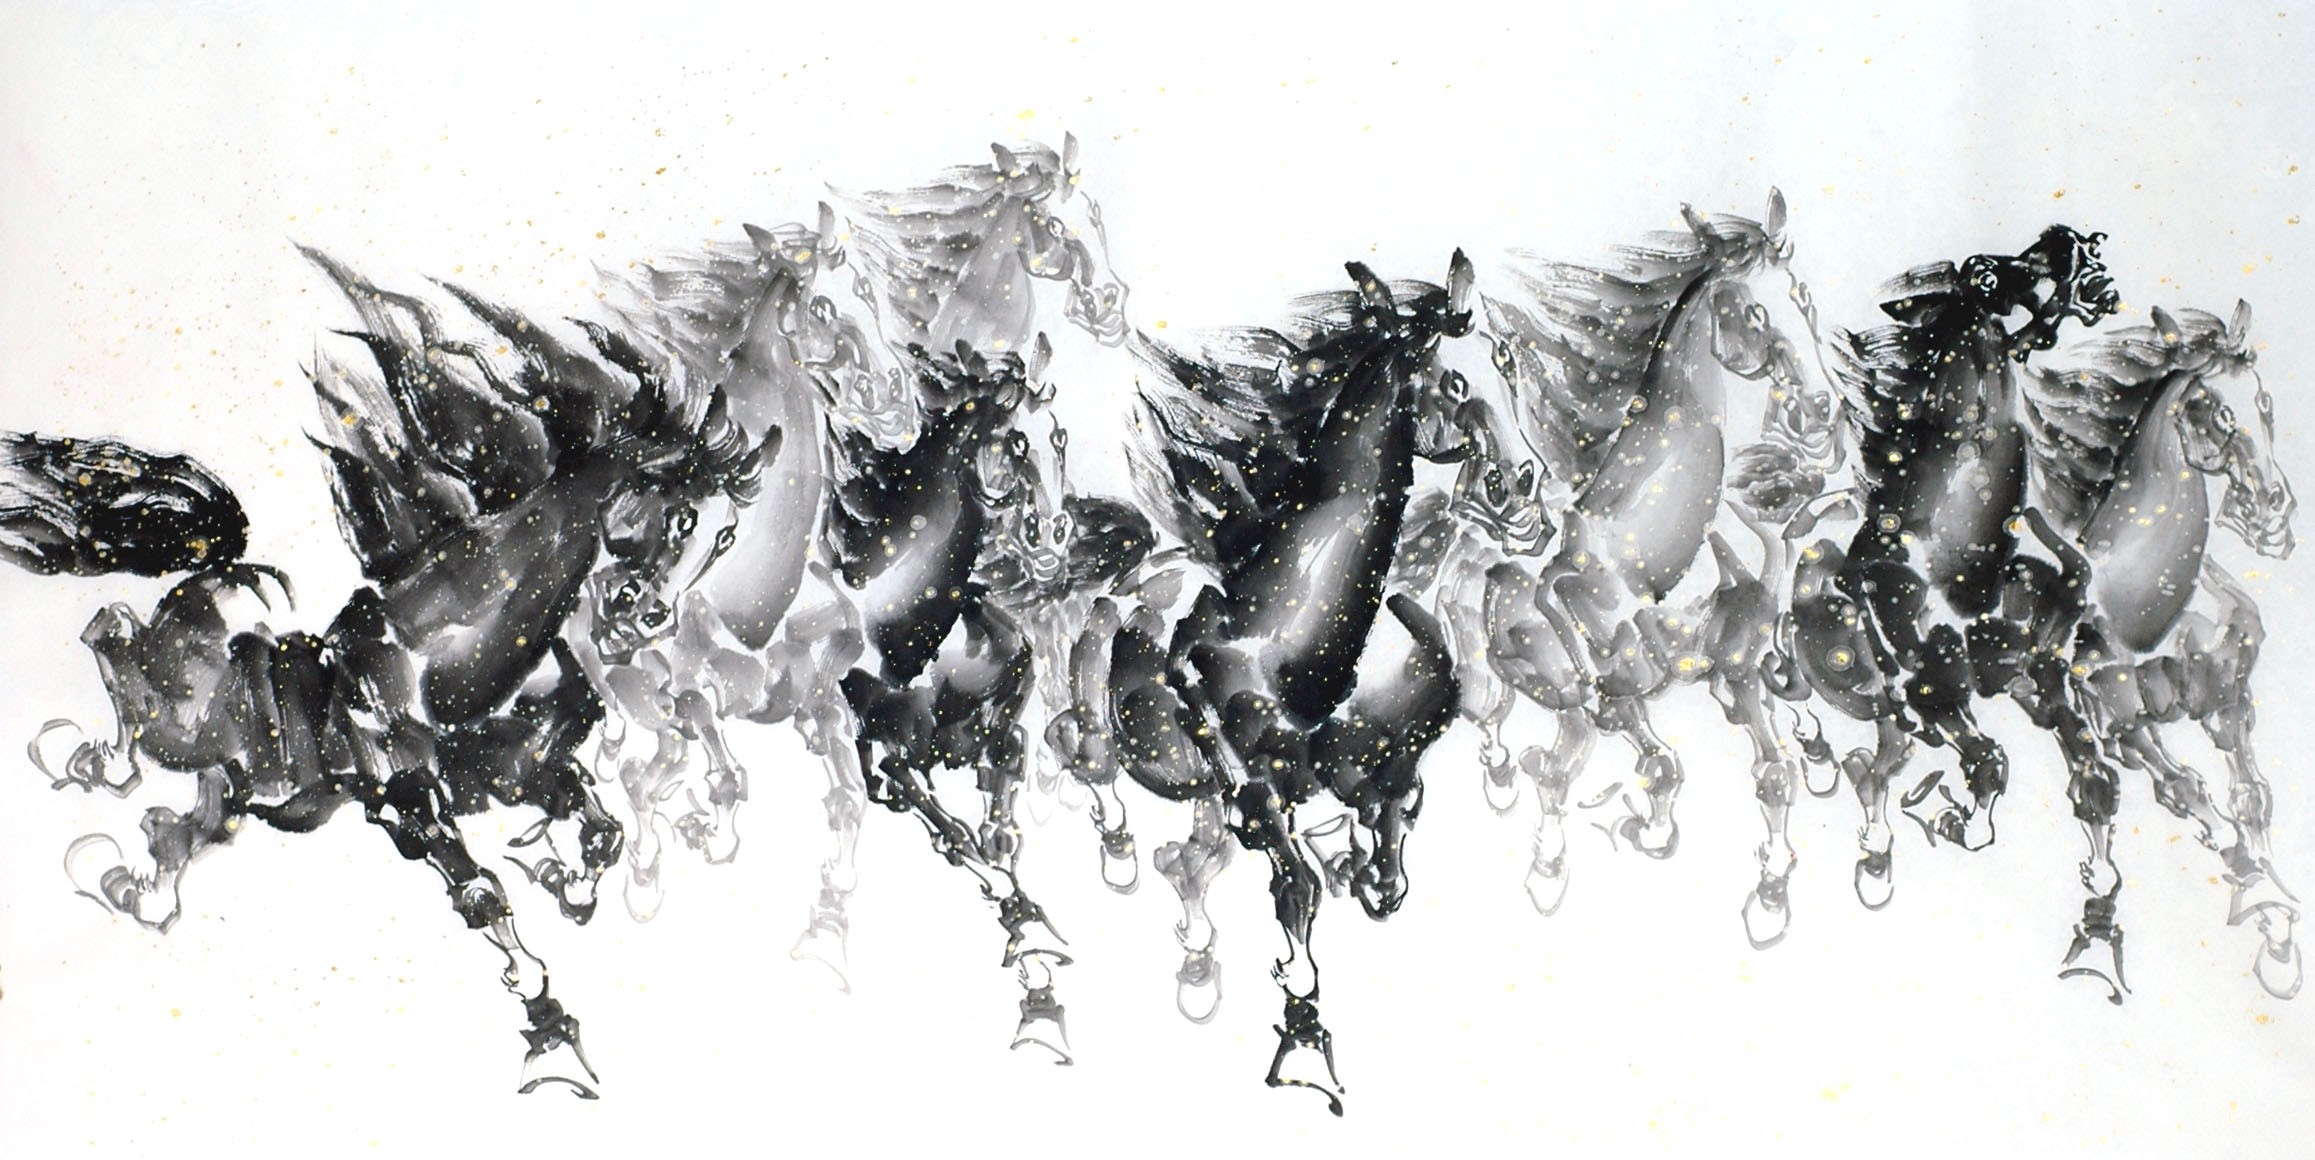 Chinese Horse Painting - CNAG013320